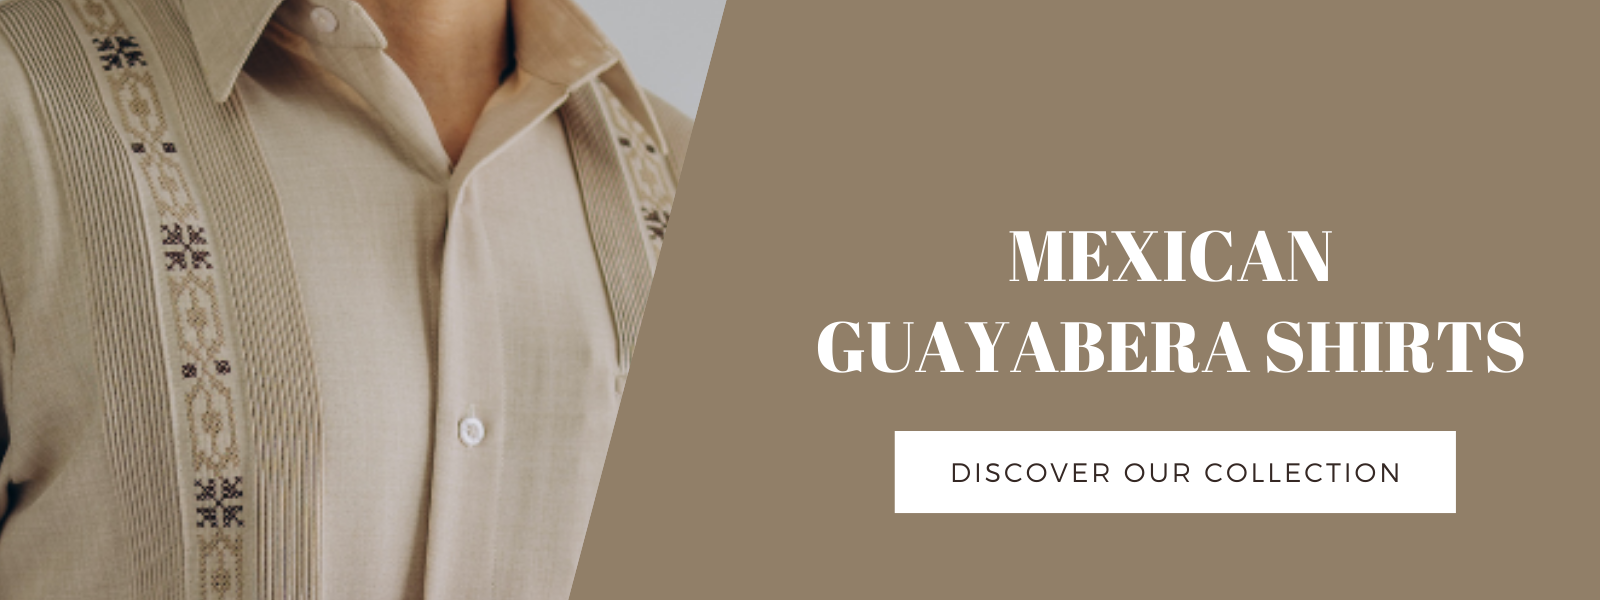 mexican guayabera shirt